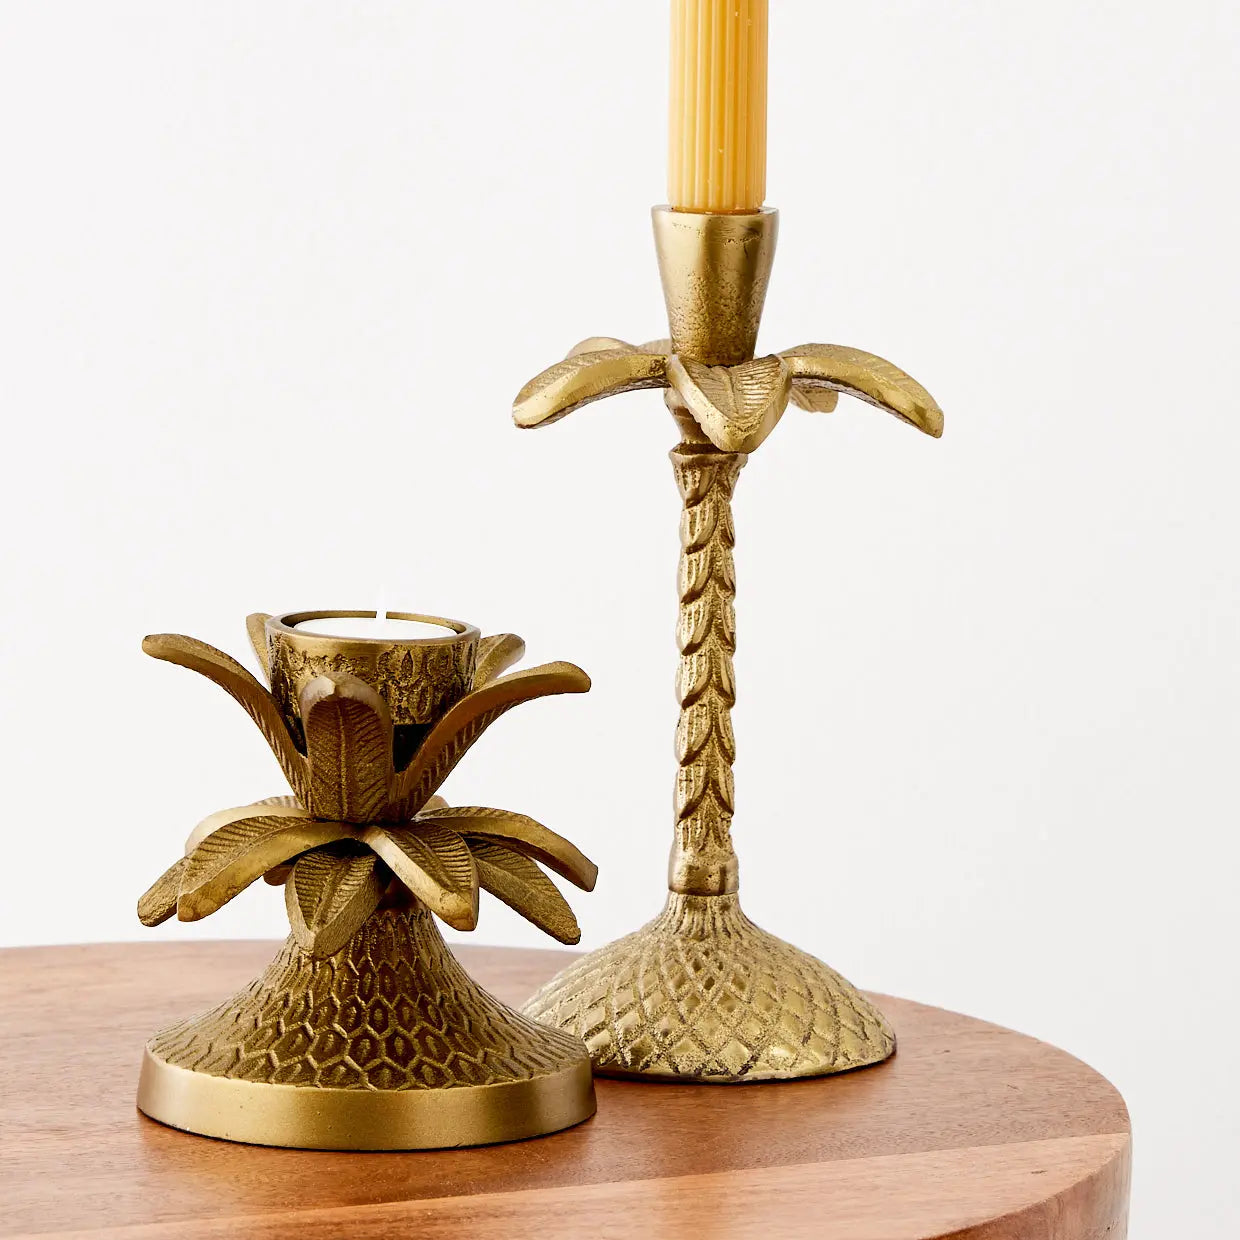 Tulum Tall Metal Taper Candle Holder Gold - GigiandTom